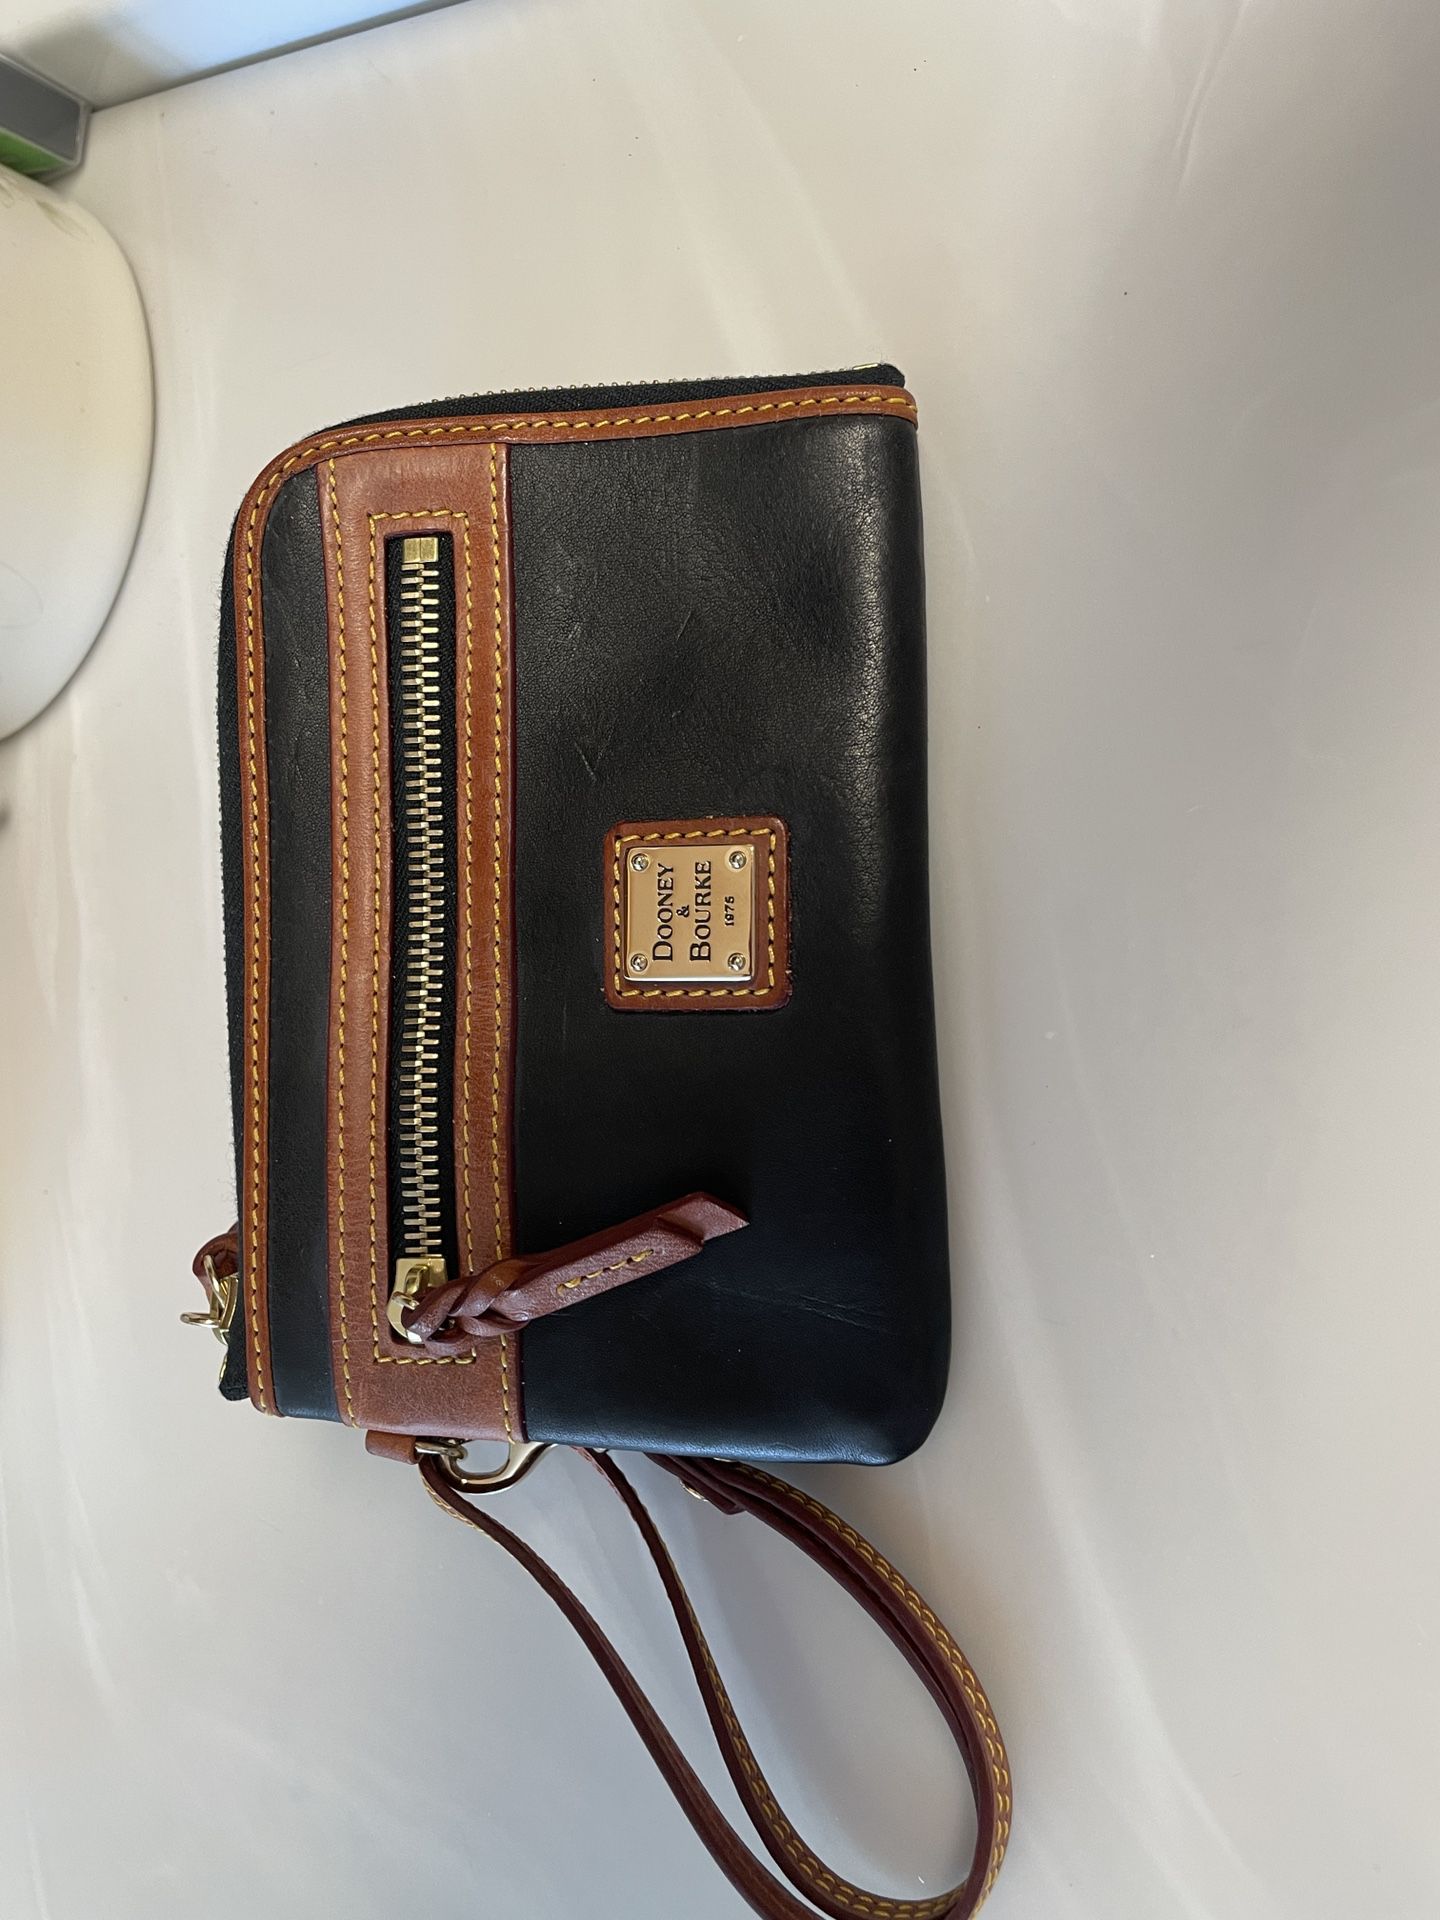 Dooney and Bourke wristlet/clutch purse